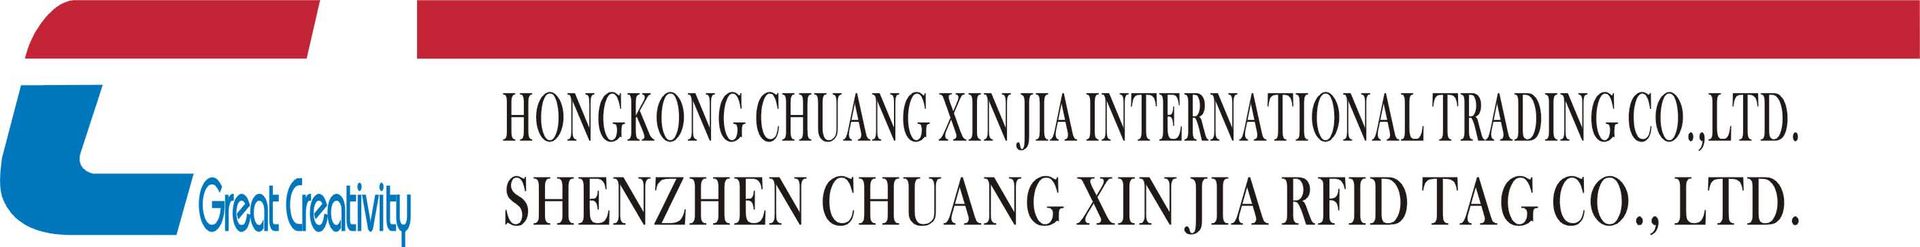 Shenzhen Chuangxinjia RFID Tag Co., LTD logo